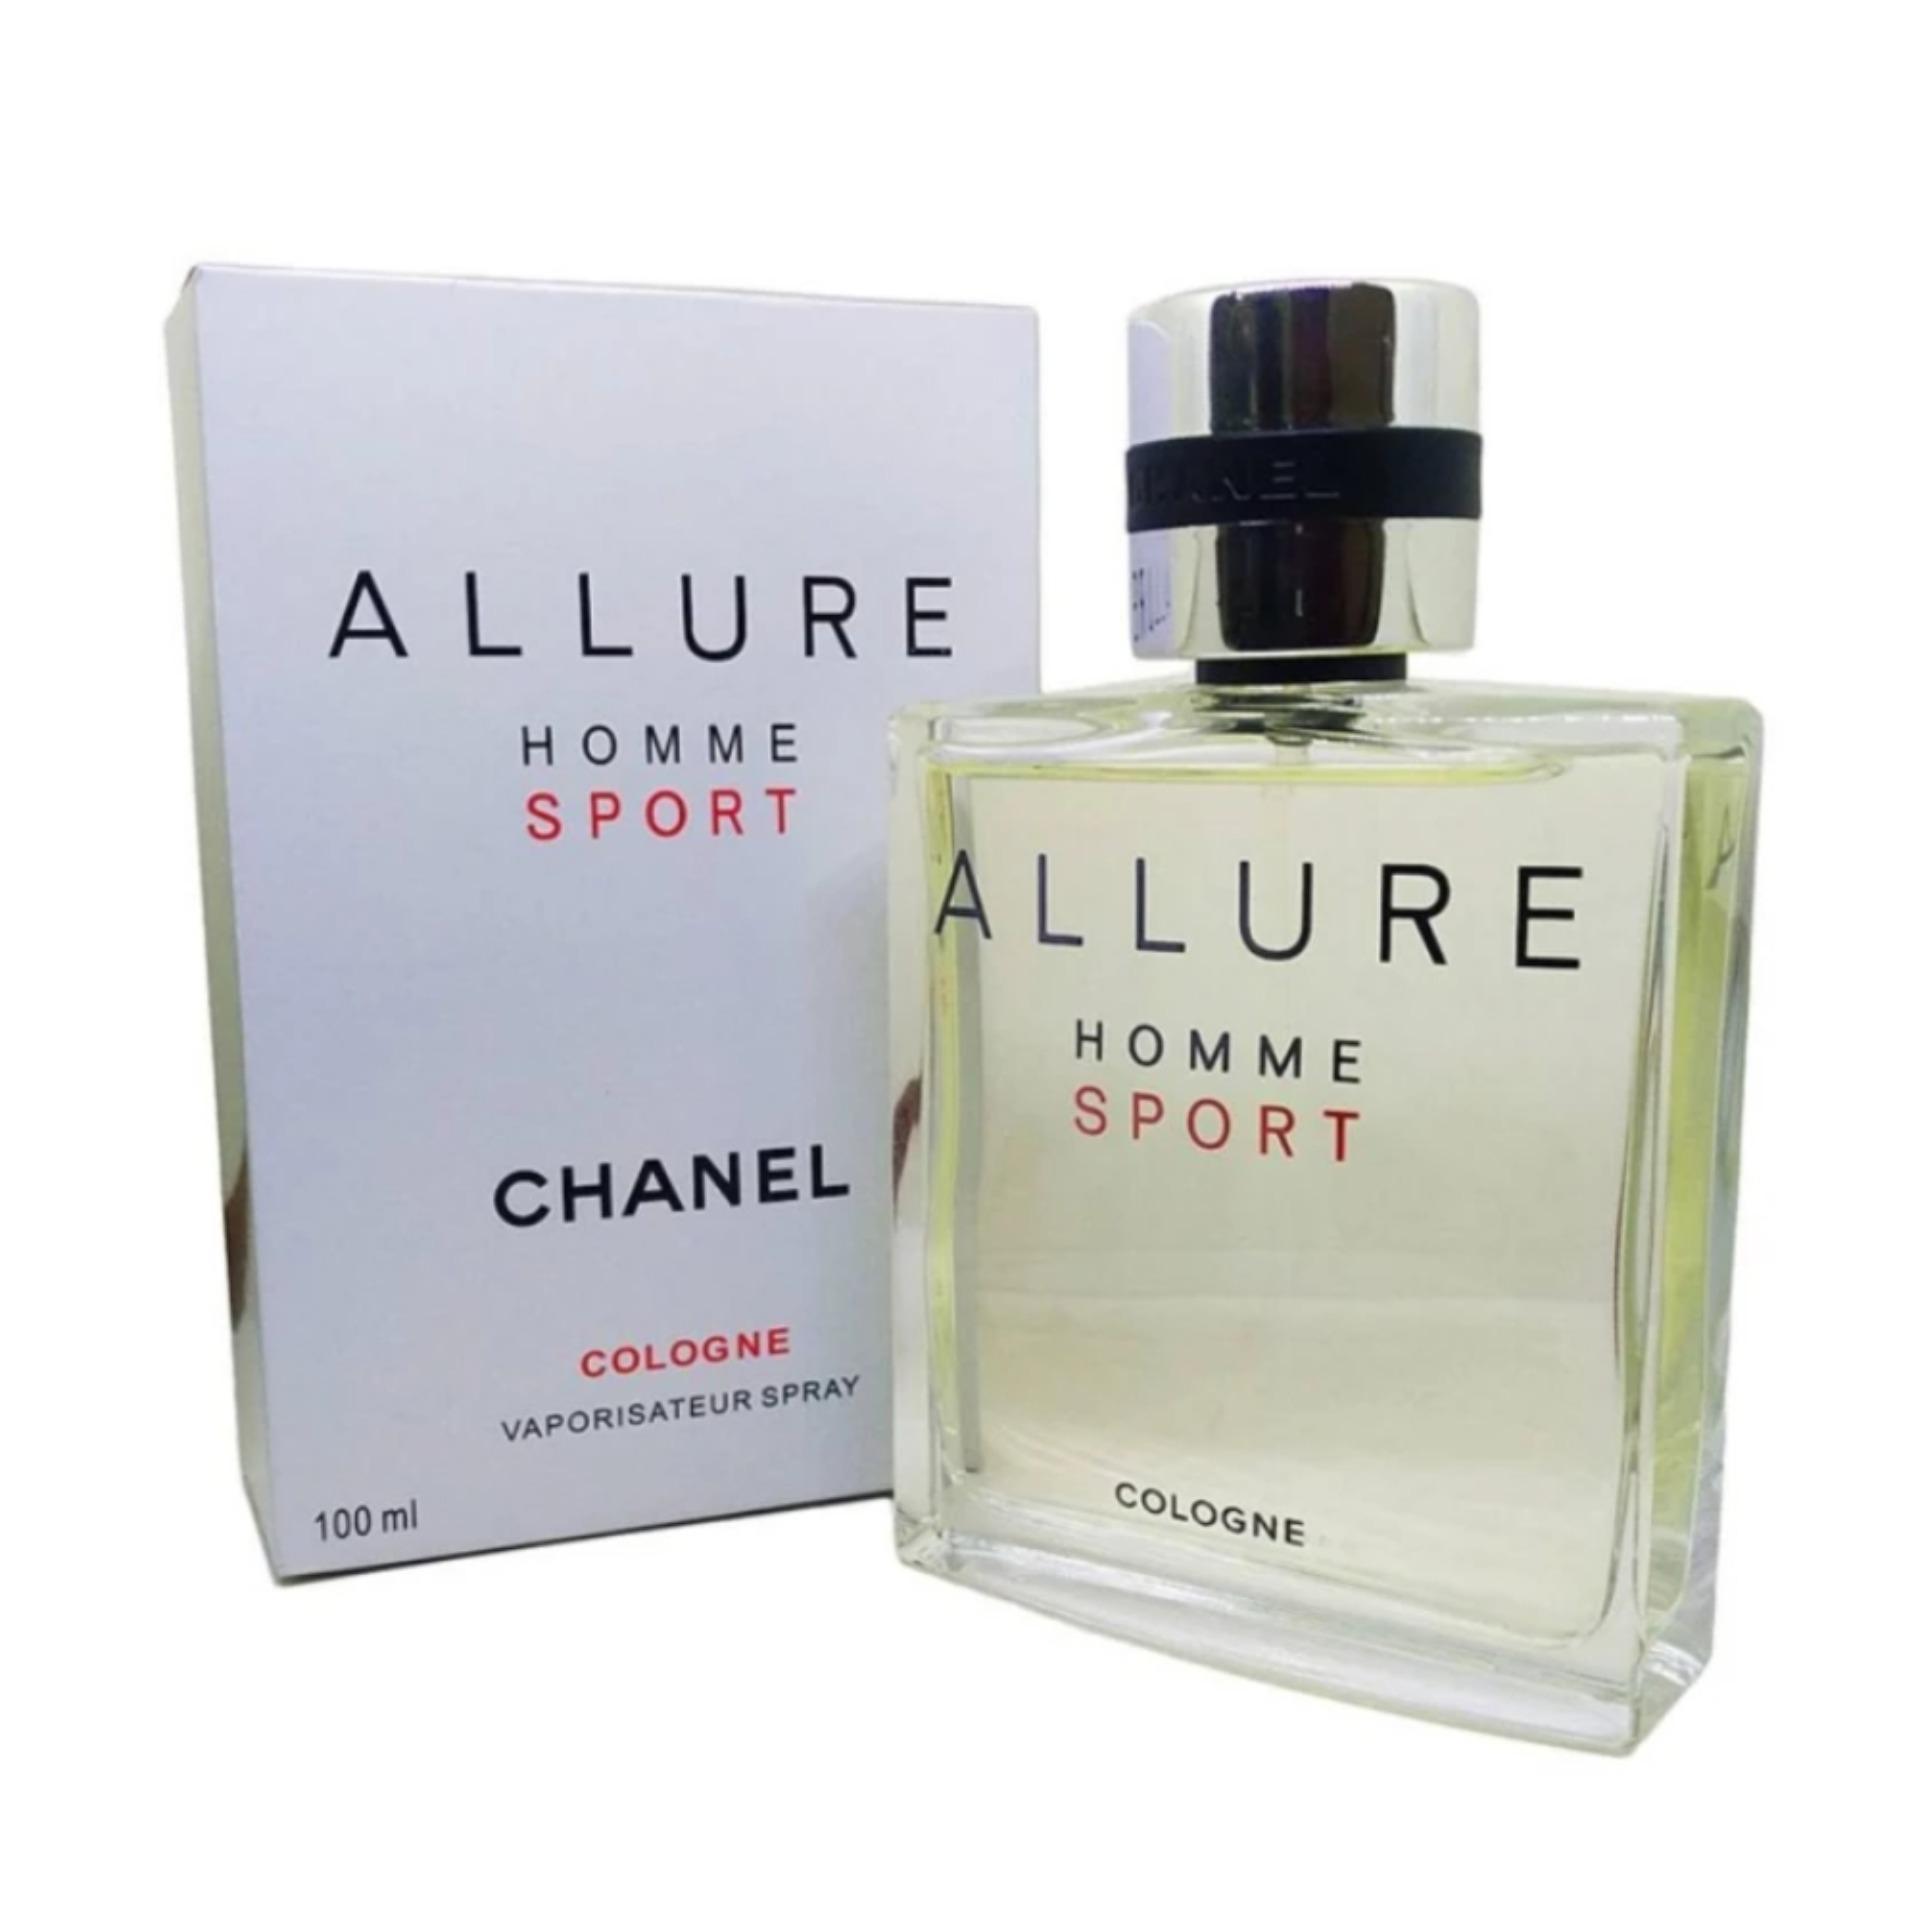 Туалетная вода chanel allure homme. Chanel Allure homme Sport 100ml. Chanel Allure homme Sport Cologne 100 ml. Аллюр хом Шанель 100 мл. Chanel Allure homme Sport.